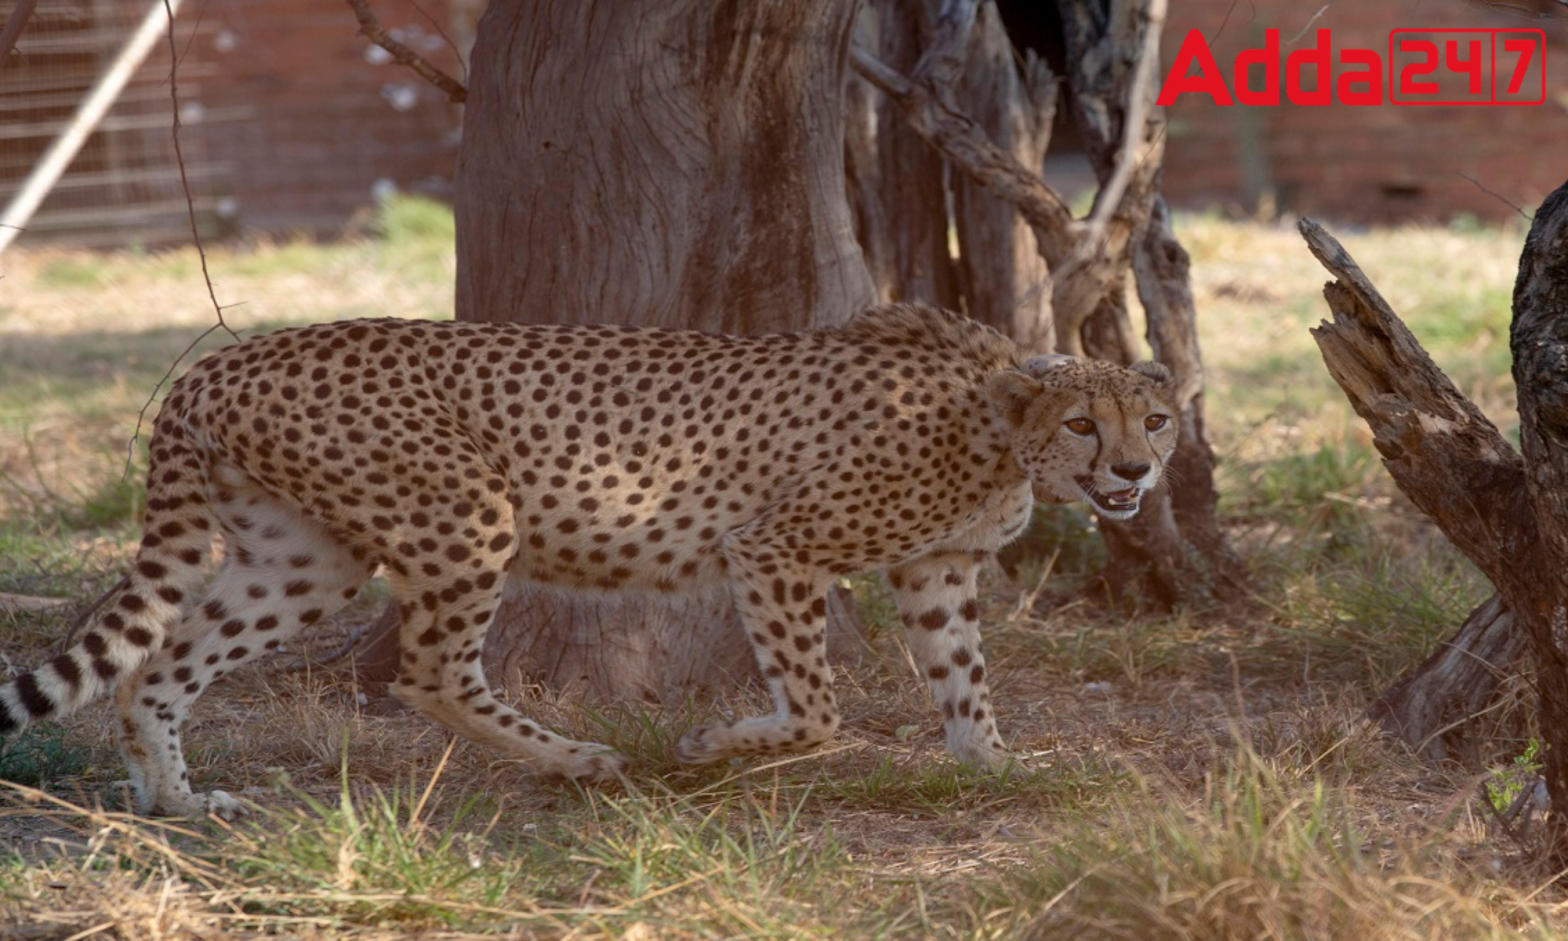 Cheetah Introduction Project Monitoring